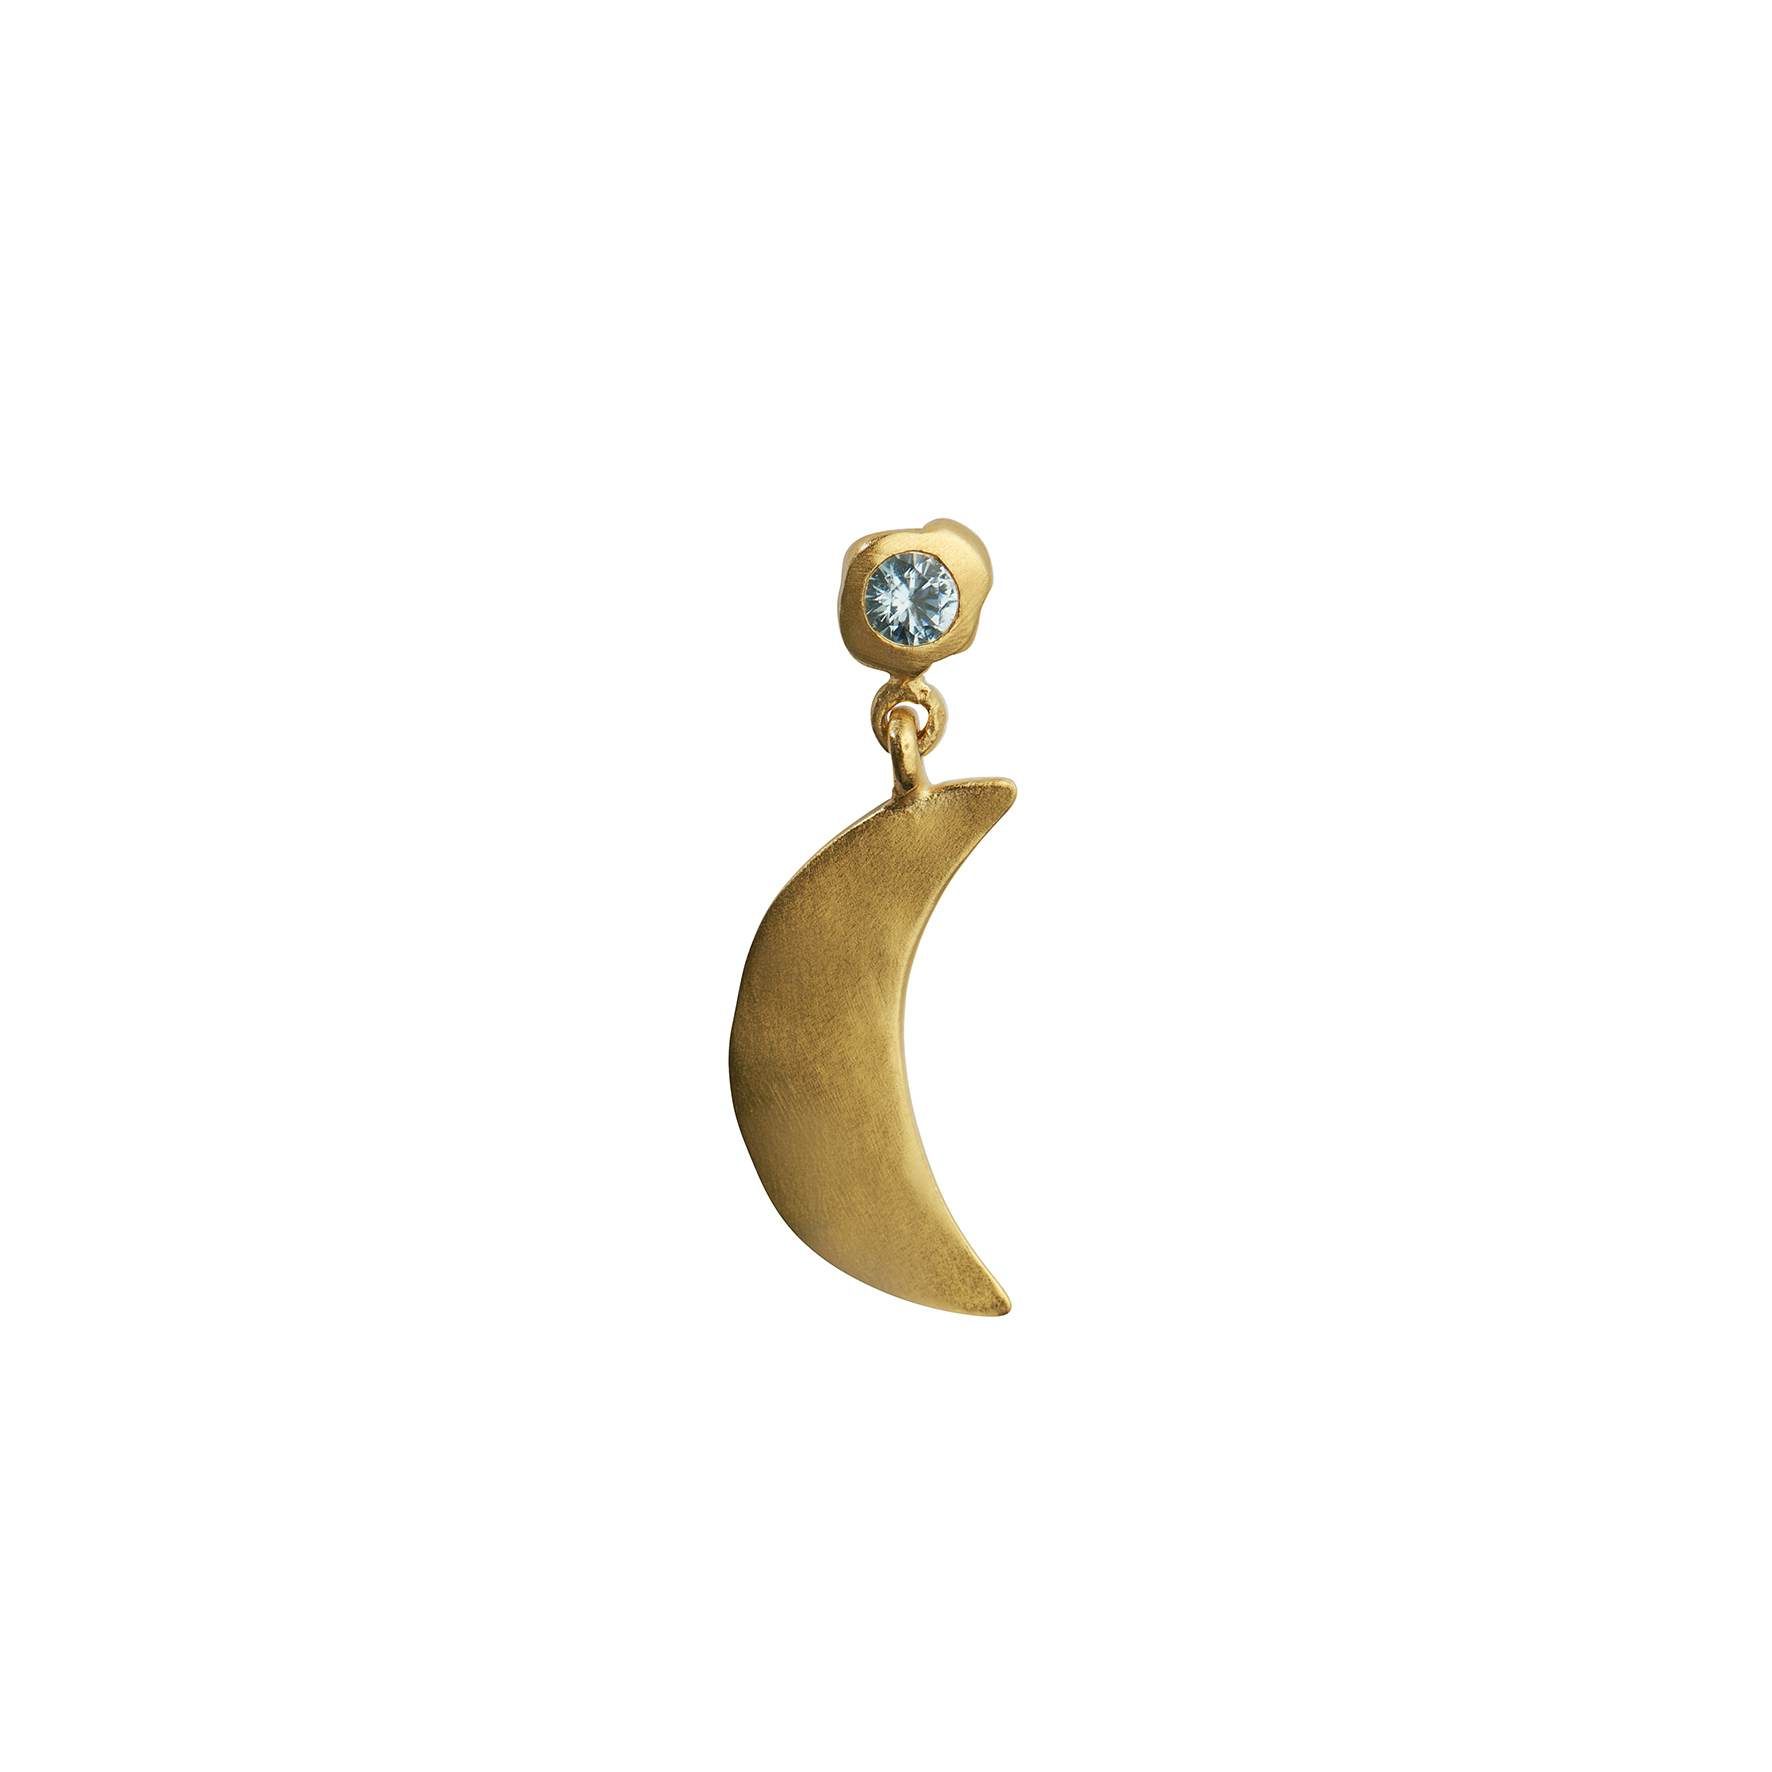 Big Dot Bella Moon with Blue Lagune Stone fra STINE A Jewelry i Forgyldt-Sølv Sterling 925